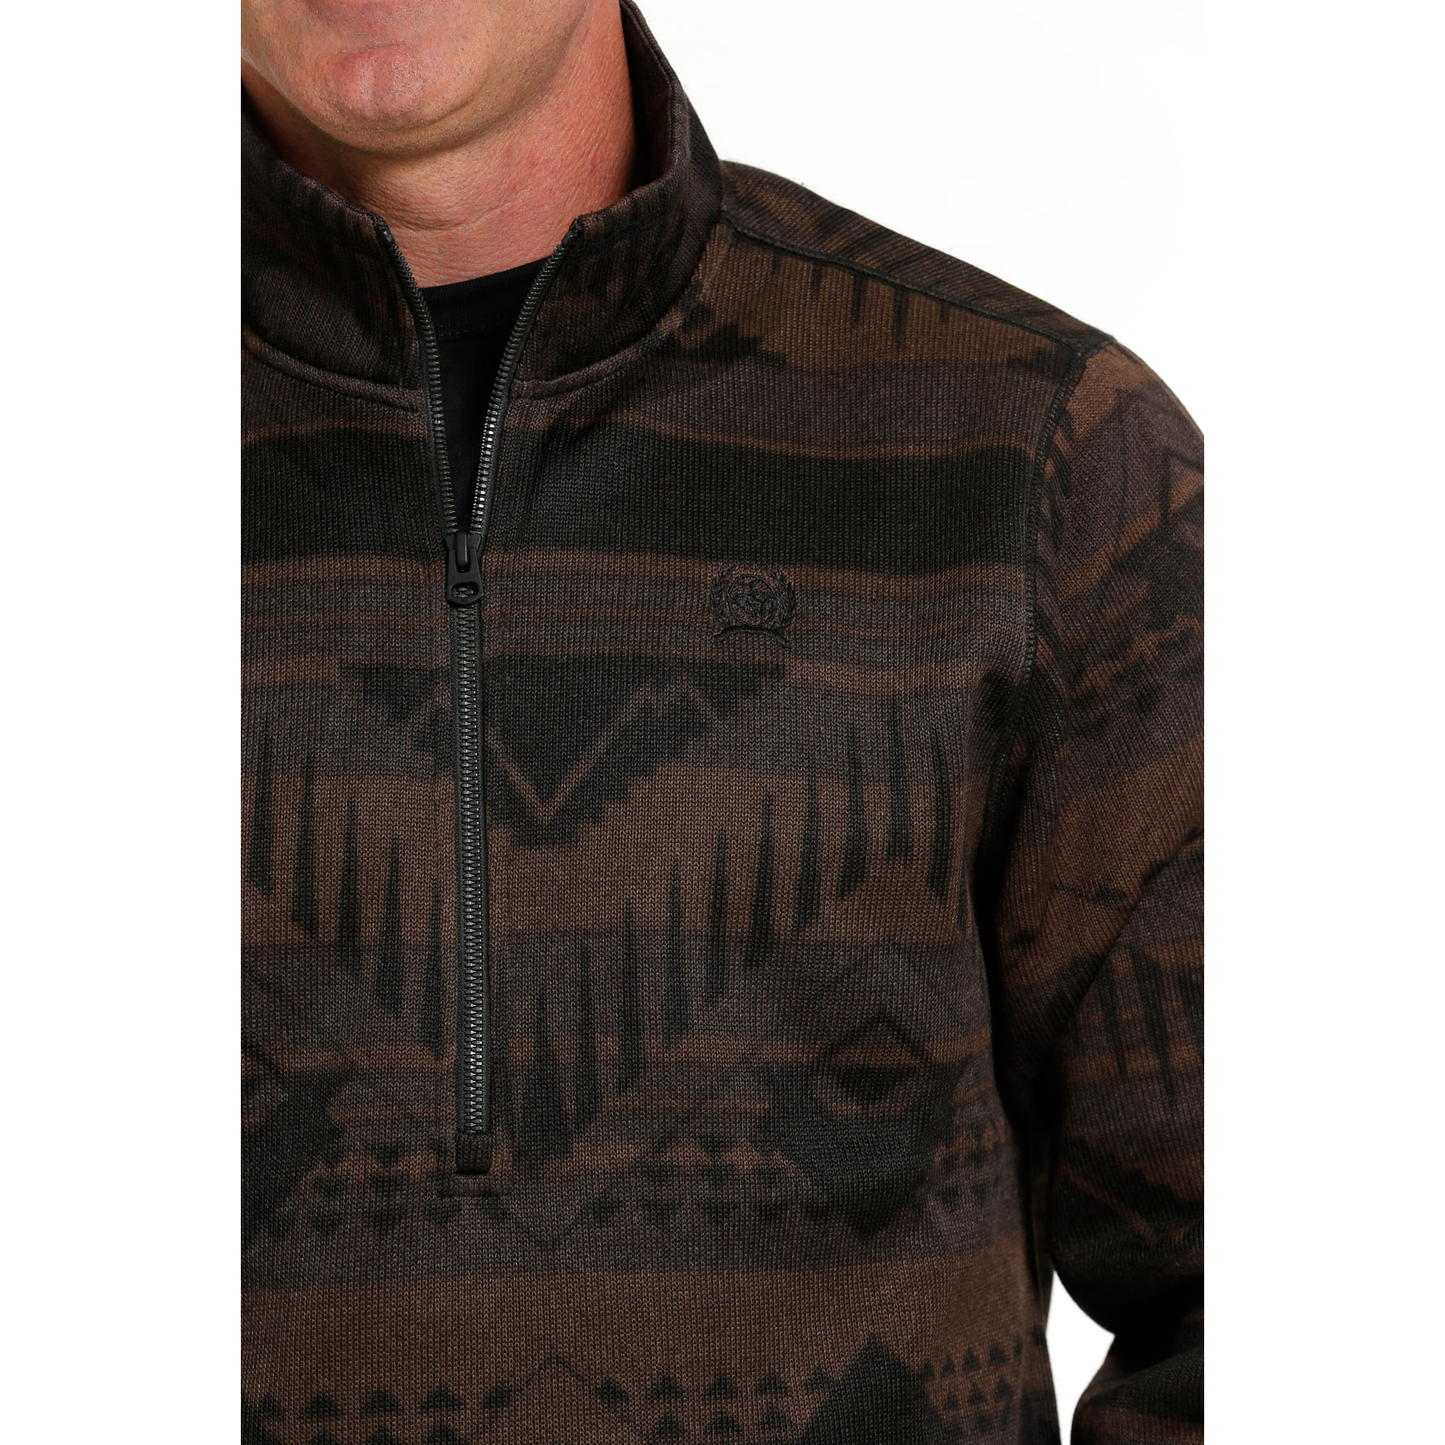 Cinch Men's Brown Printed Half Zip Sweater Pullover MWK1558005